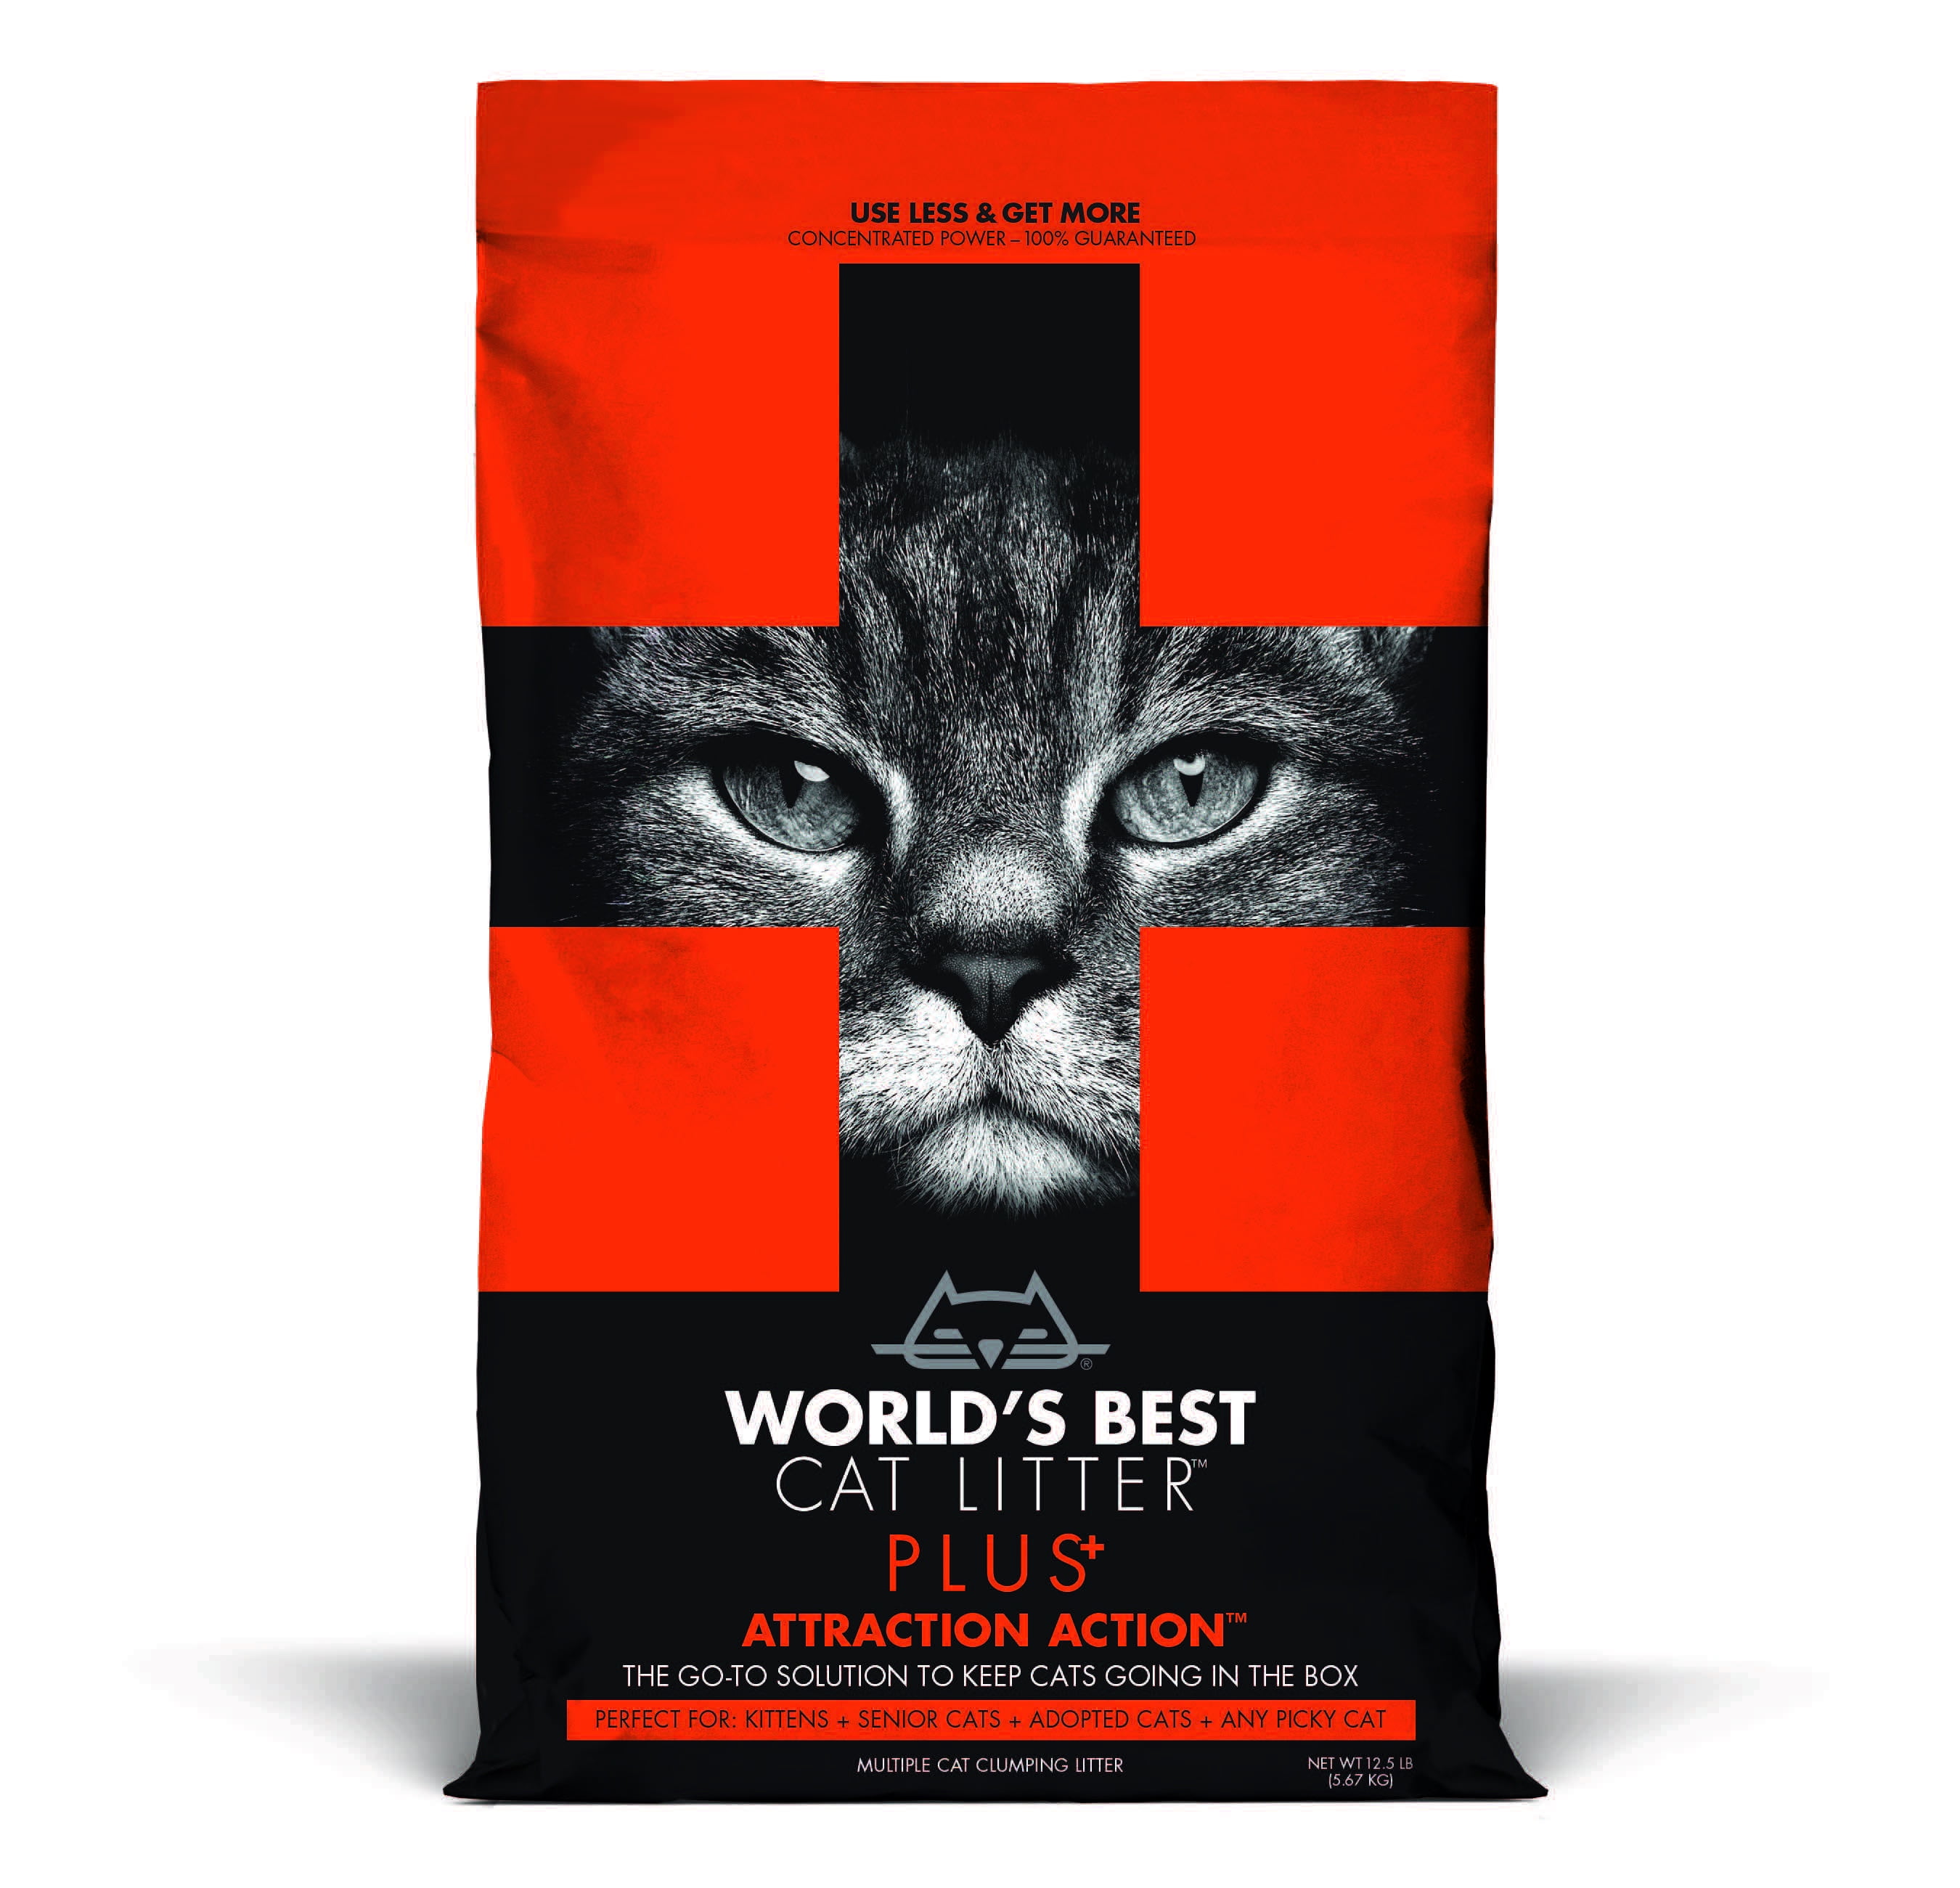 World's Best Cat Litter Attraction Action, 12.5 lb.